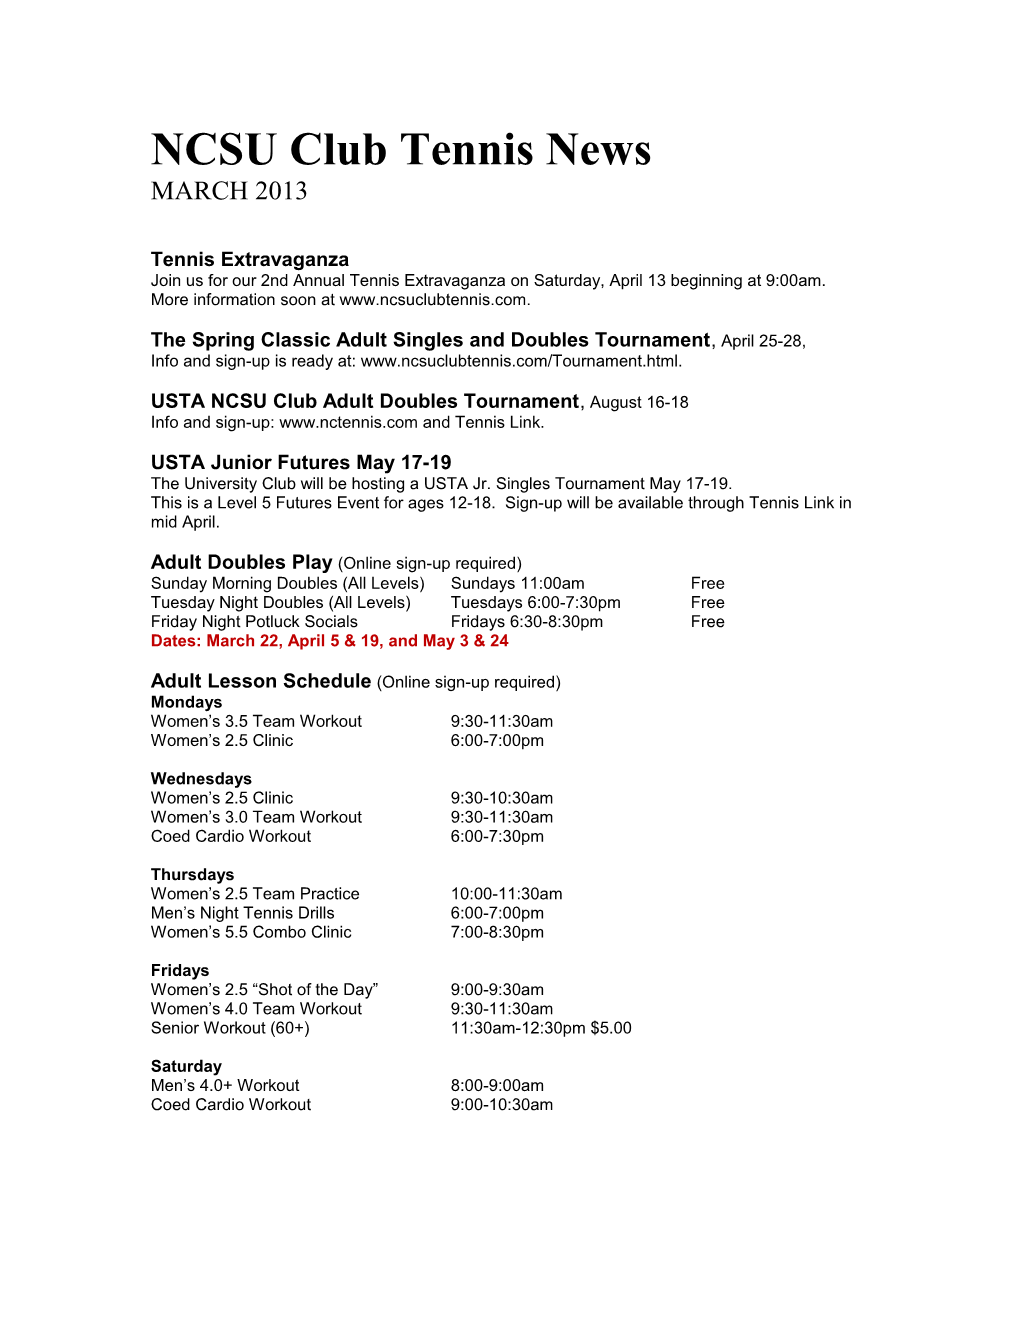 University Club Tennis News May 2004